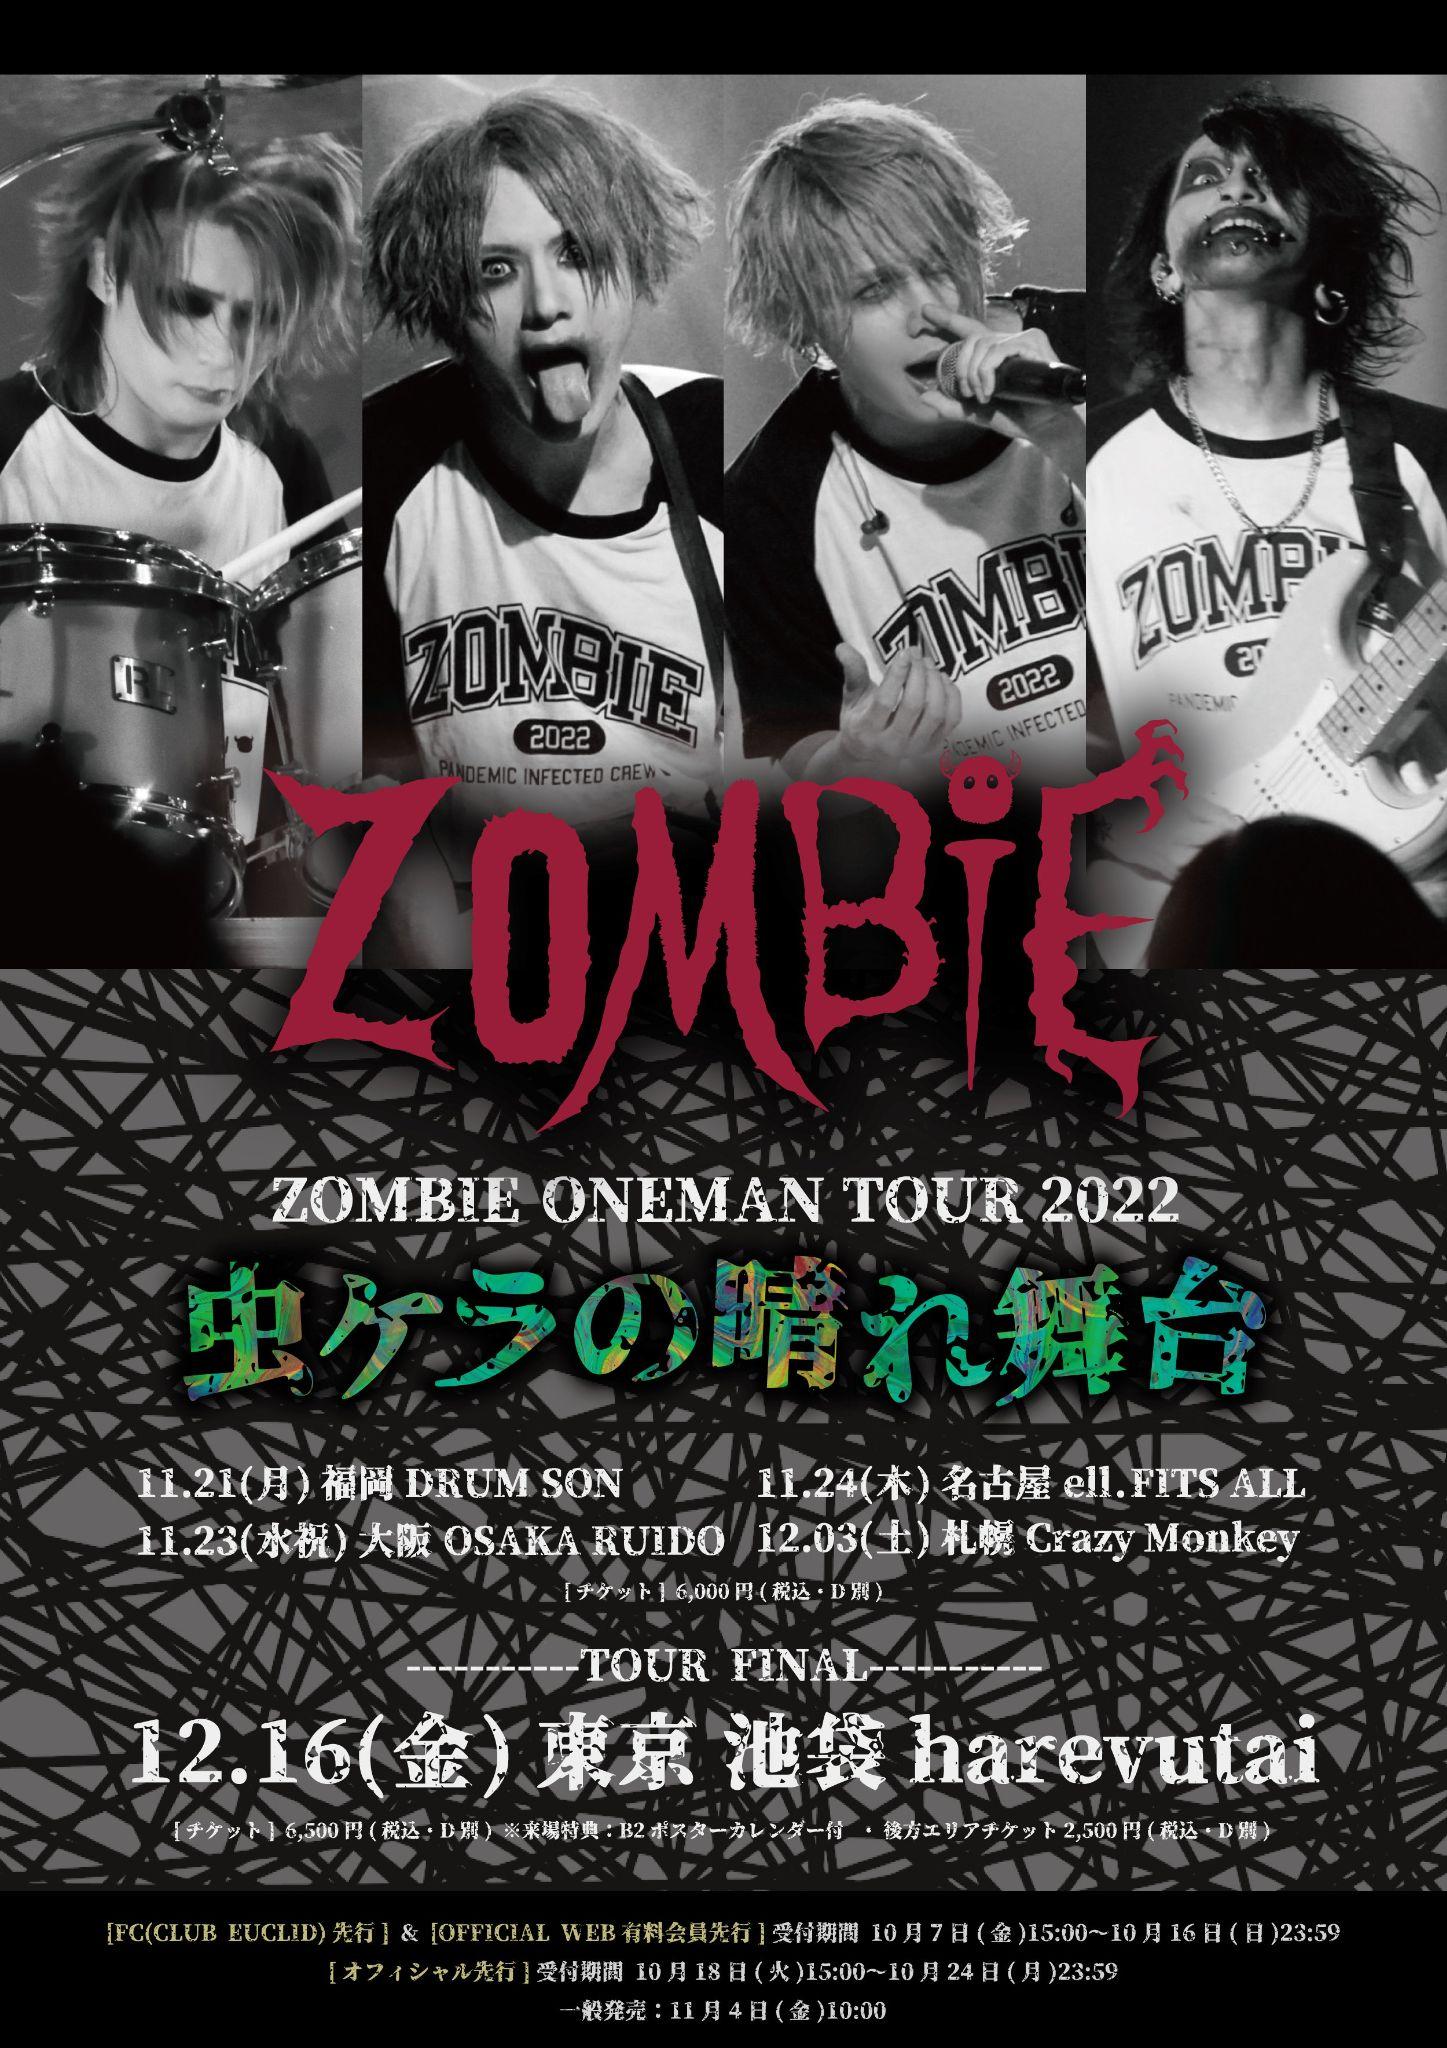 word image 2528 2 - 【Live Report】ZOMBIE. “MUSHIKERA NO HAREVUTAI TOUR” (OSAKA RUIDO) - Nippon Gaku